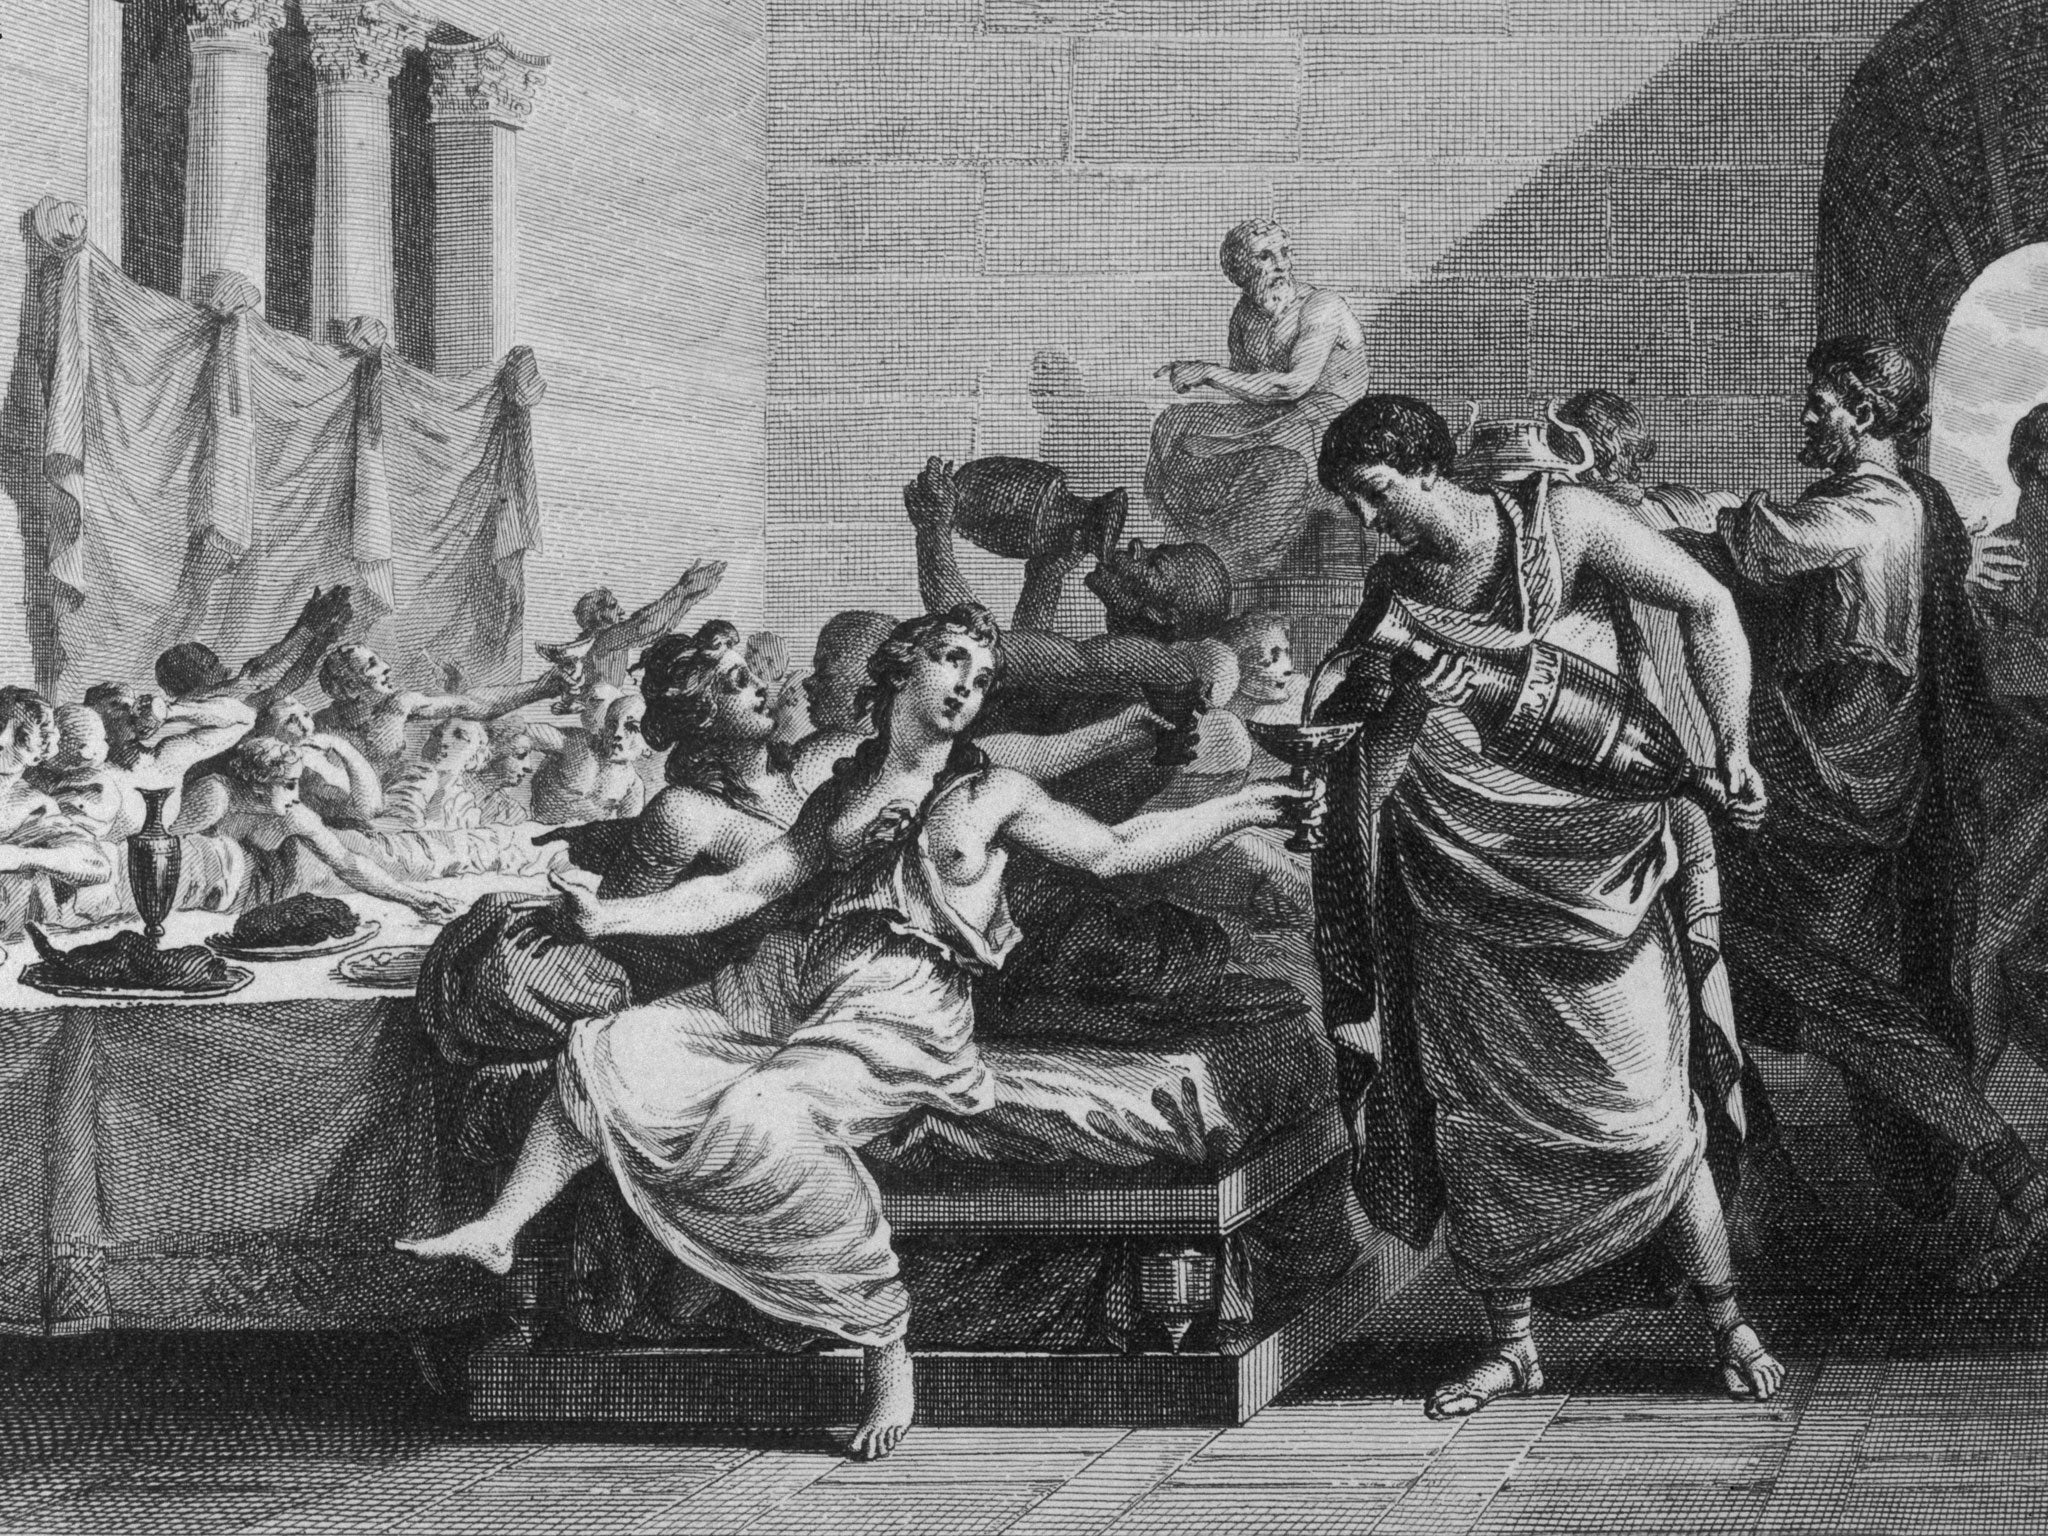 The Roman festival of Saturnalia